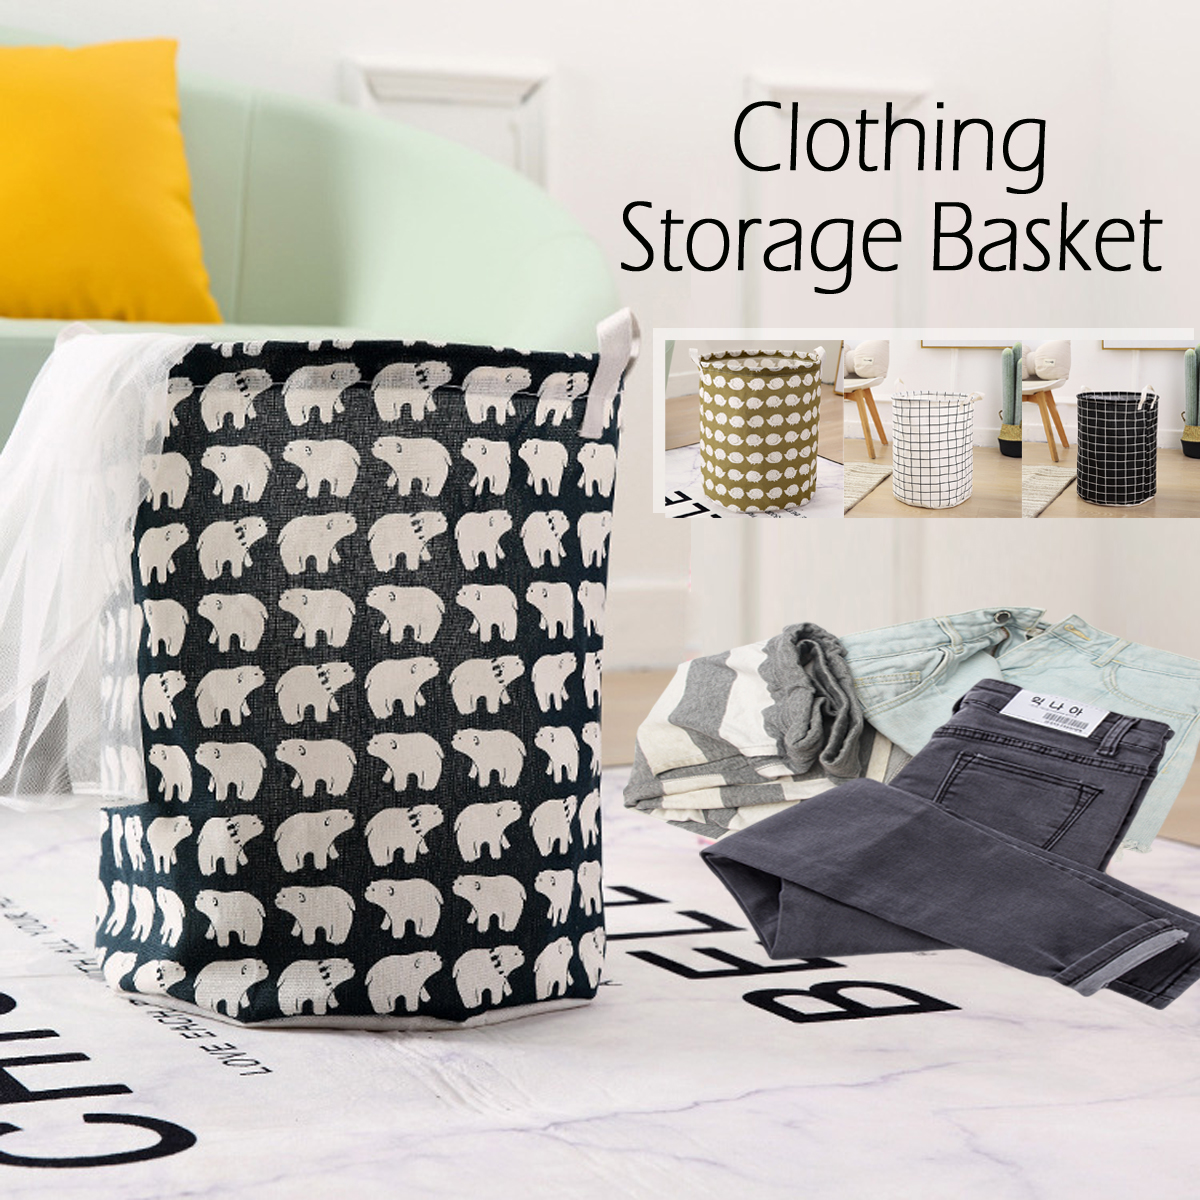 Dirty-Clothes-Storage-Bag-Sundries-Storage-Clothing-Storage-Baskets-Folding-Laundry-Basket-Cotton-Fa-1744167-1